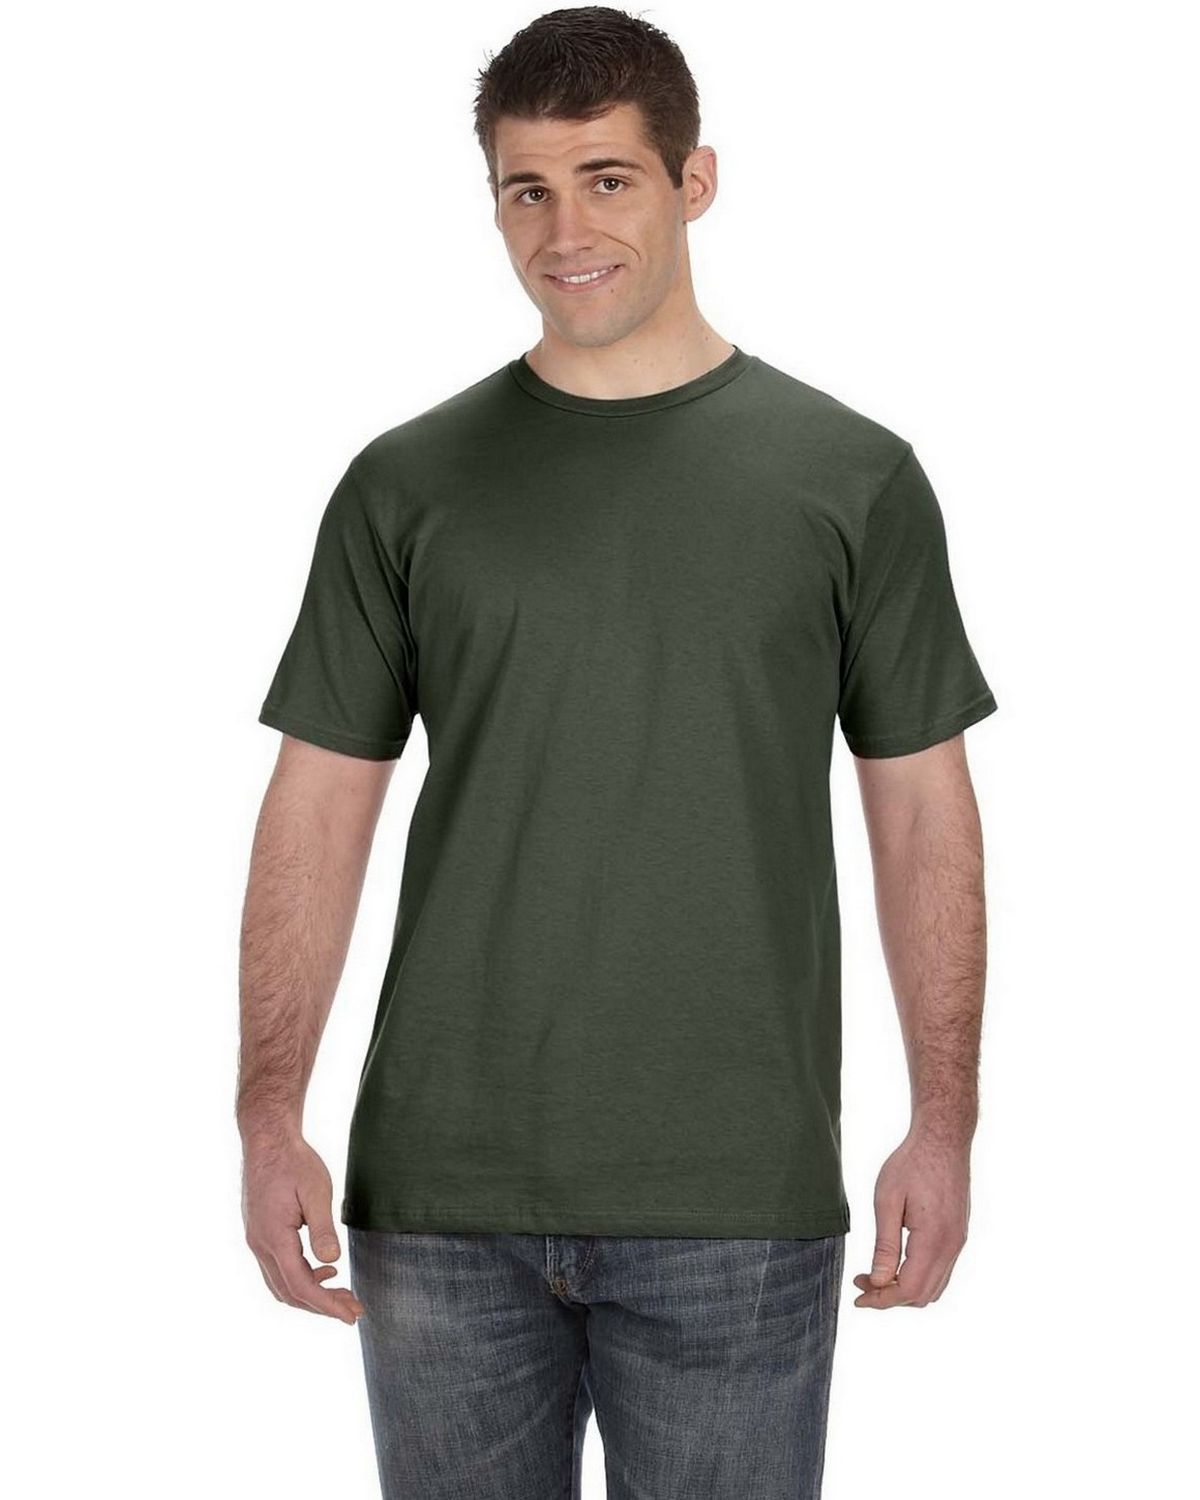 Anvil OR420 100% Organic Men's Cotton T-Shirt